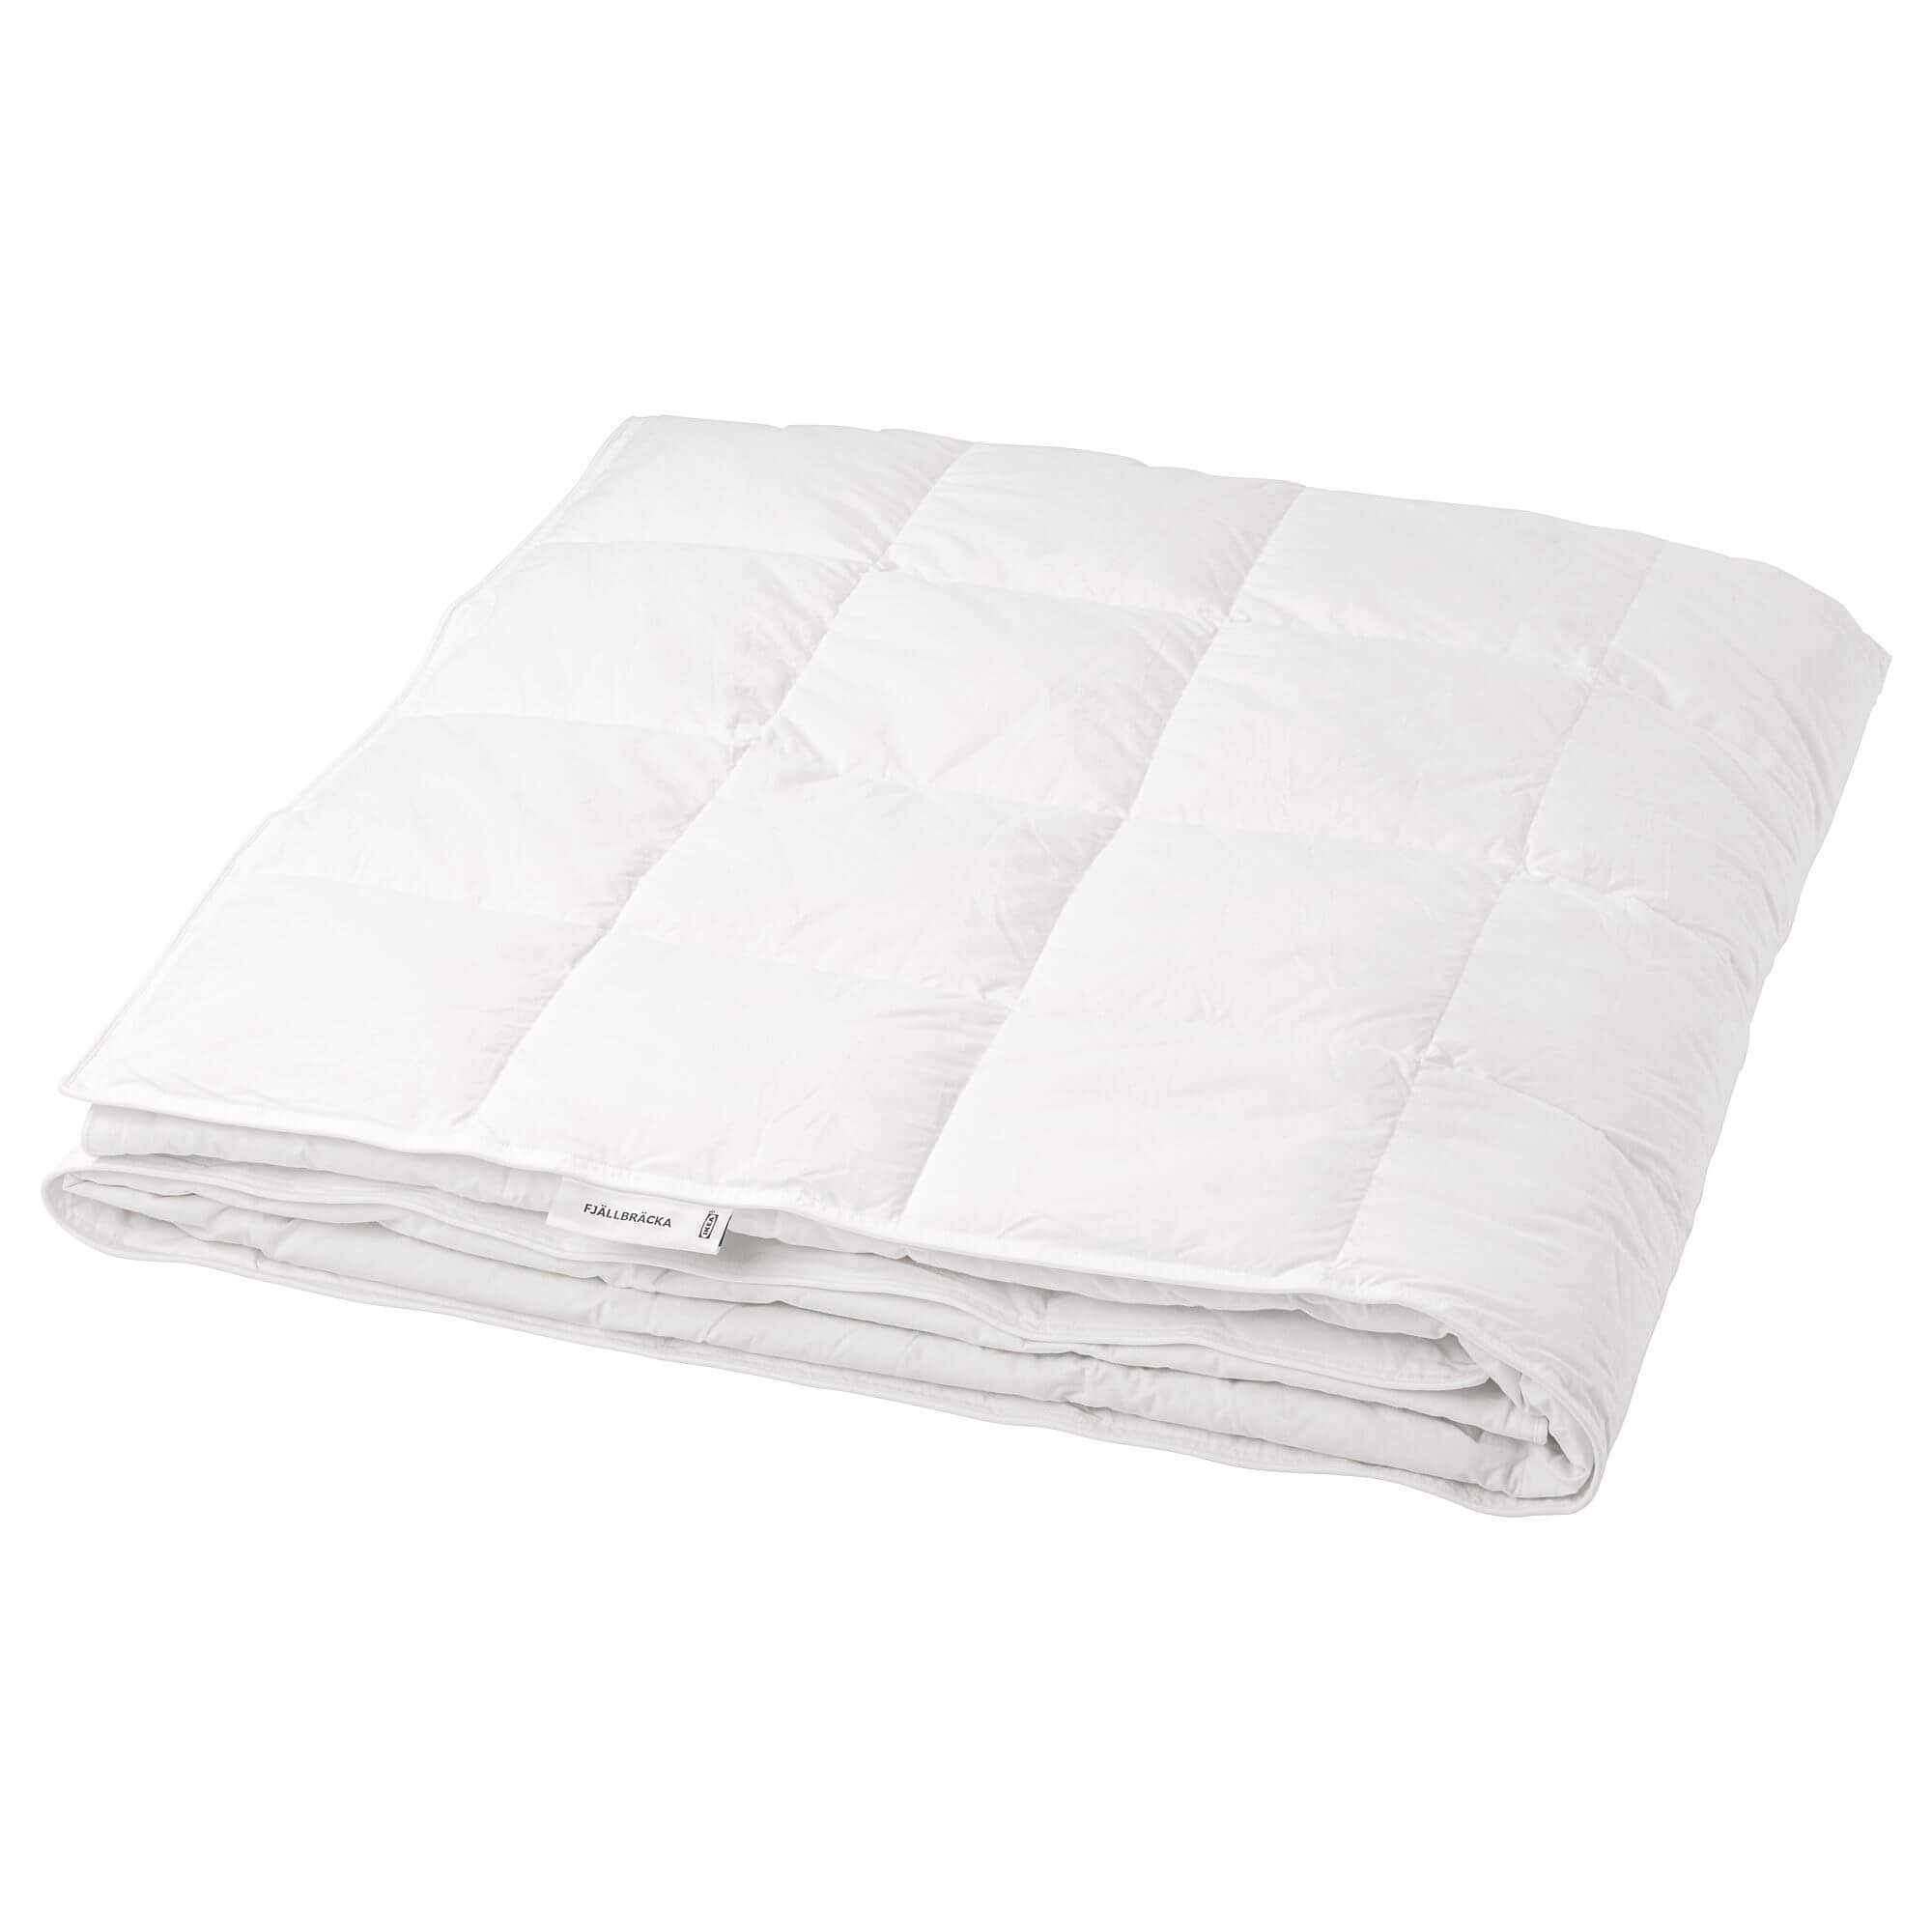 Одеяло теплое Ikea Fjallbracka 240x220 см, белый одеяло легкое ikea safferot 240x220 белый